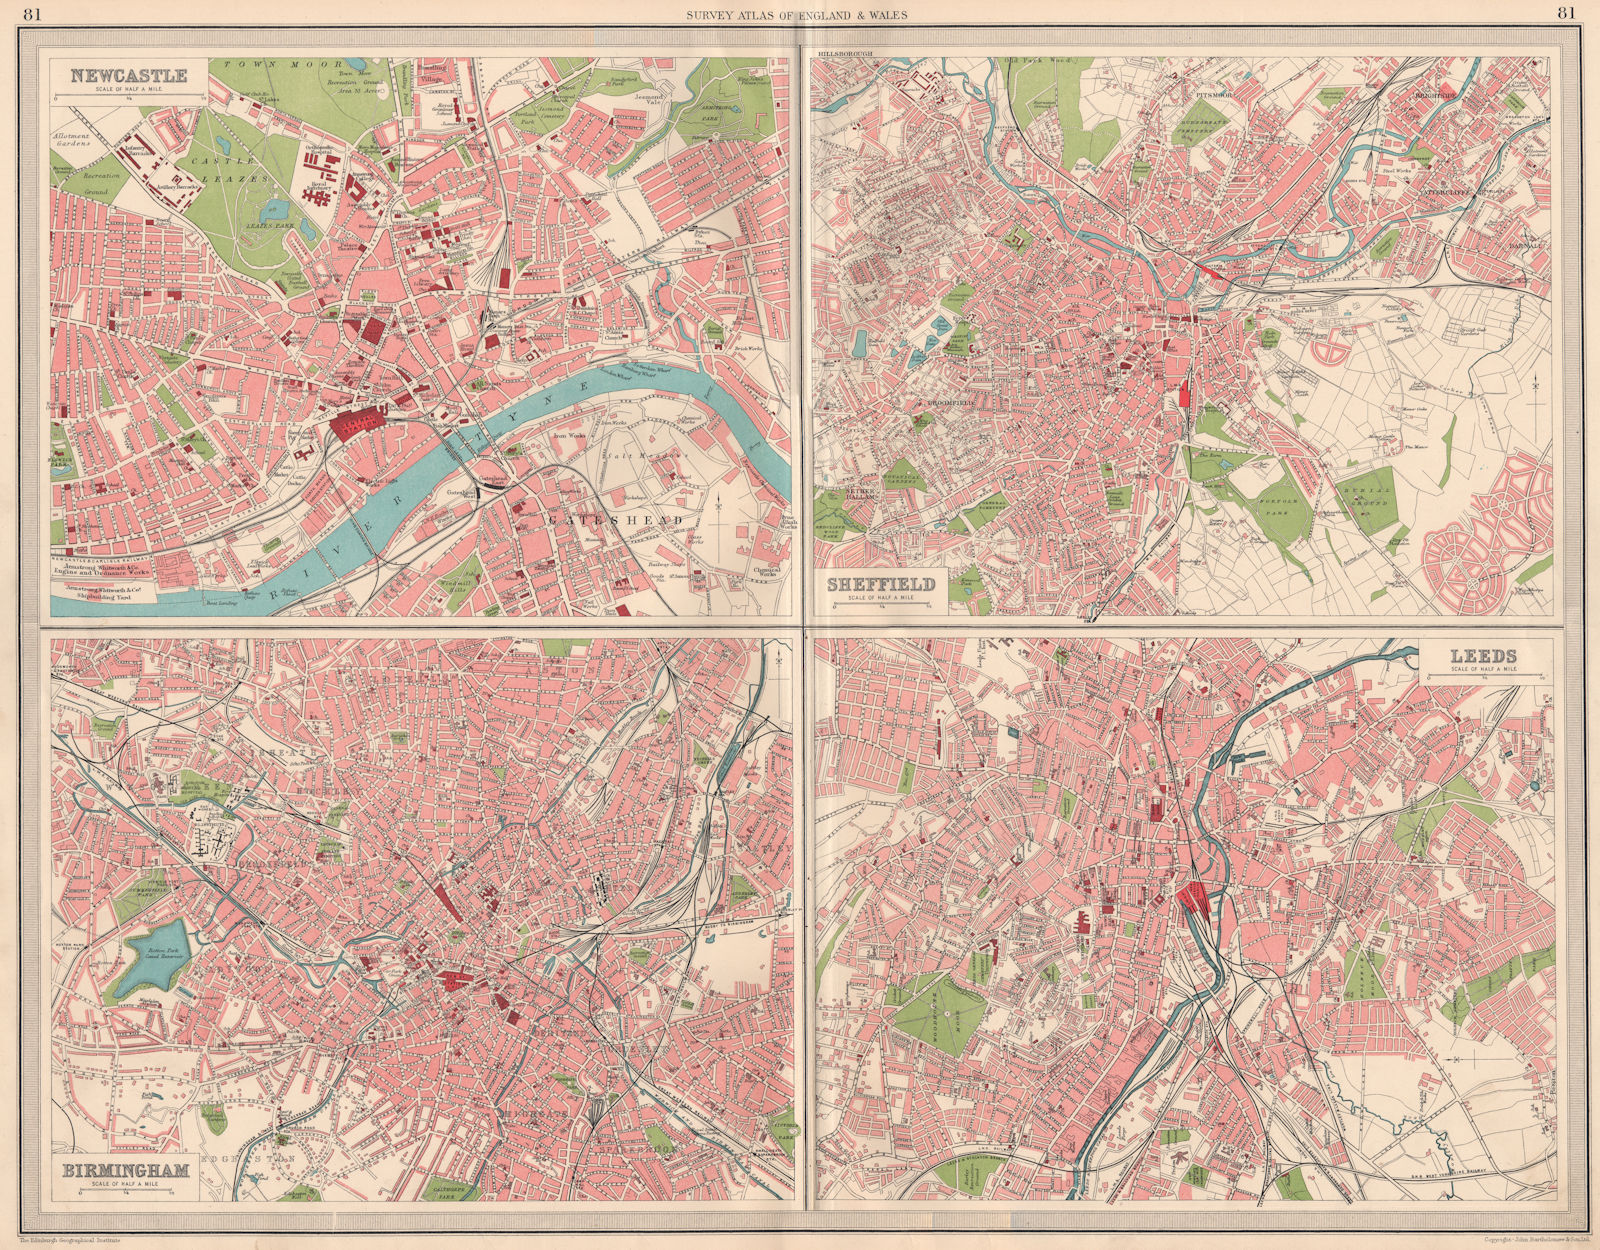 ENGLISH CITIES. Plans of Newcastle Sheffield Birmingham & Leeds. LARGE 1939 map